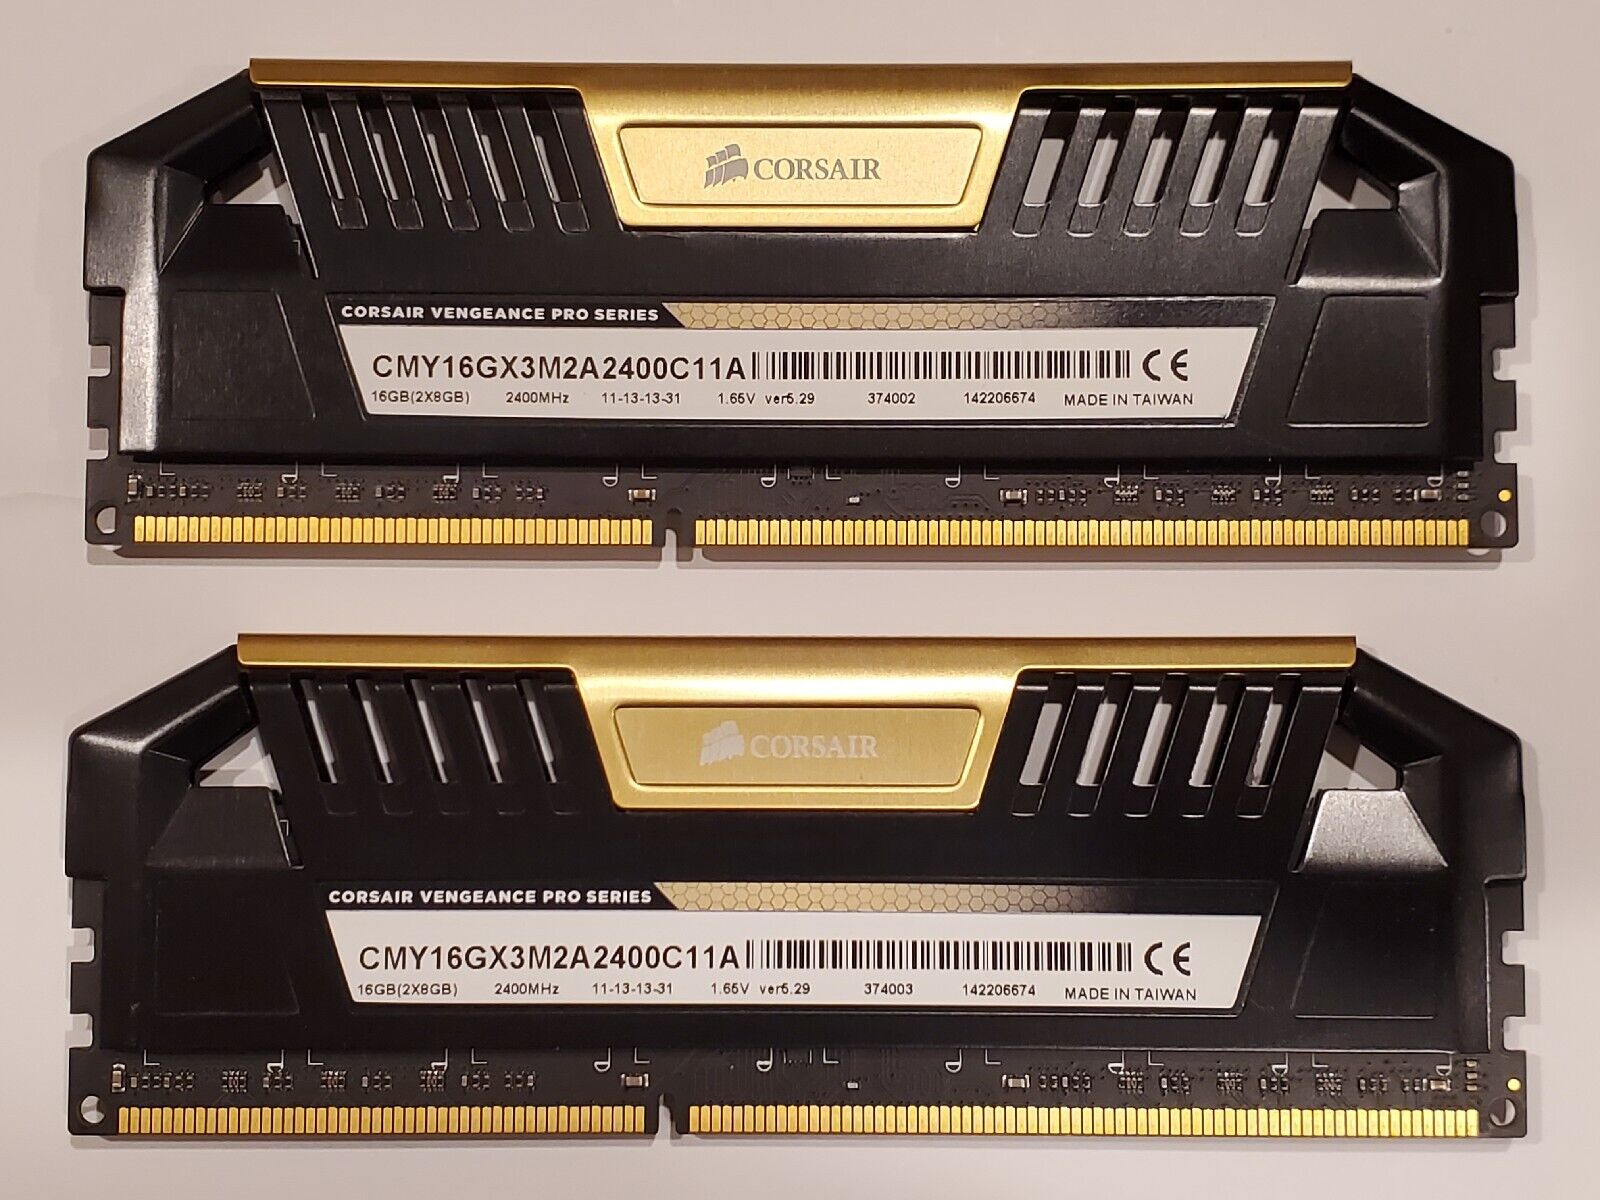 CORSAIR VENGEANCE Pro GOLD 16GB (2x8GB) 2400 MHz DDR3 (CMY16GX3M2A2400C11A)